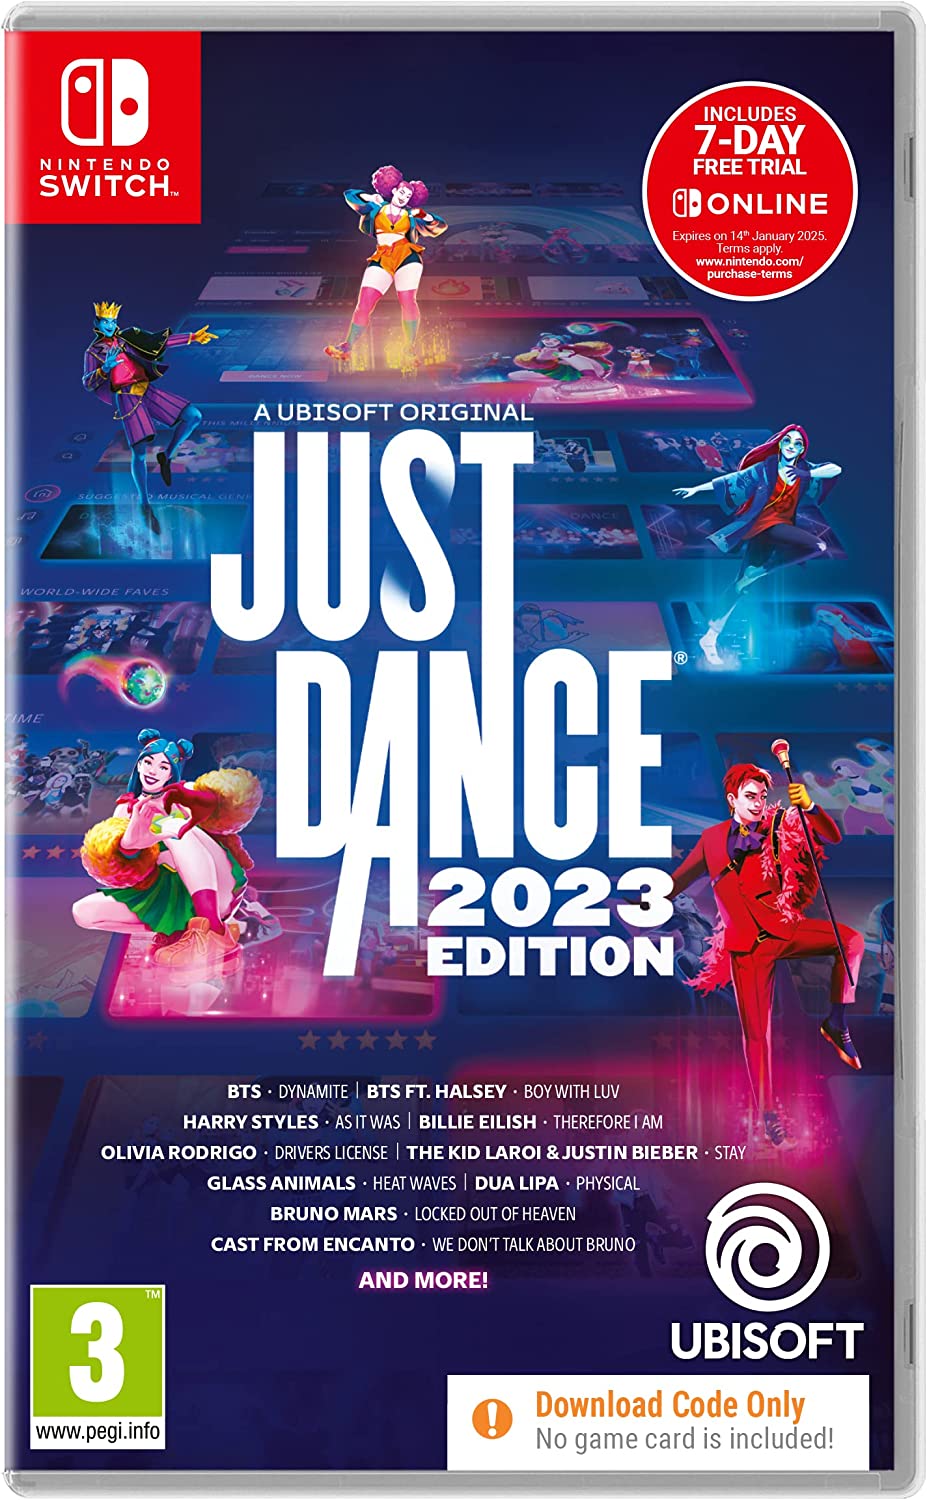 Dance Edition eTeknix (Code Switch) (Nintendo 2023 in Box) Just -